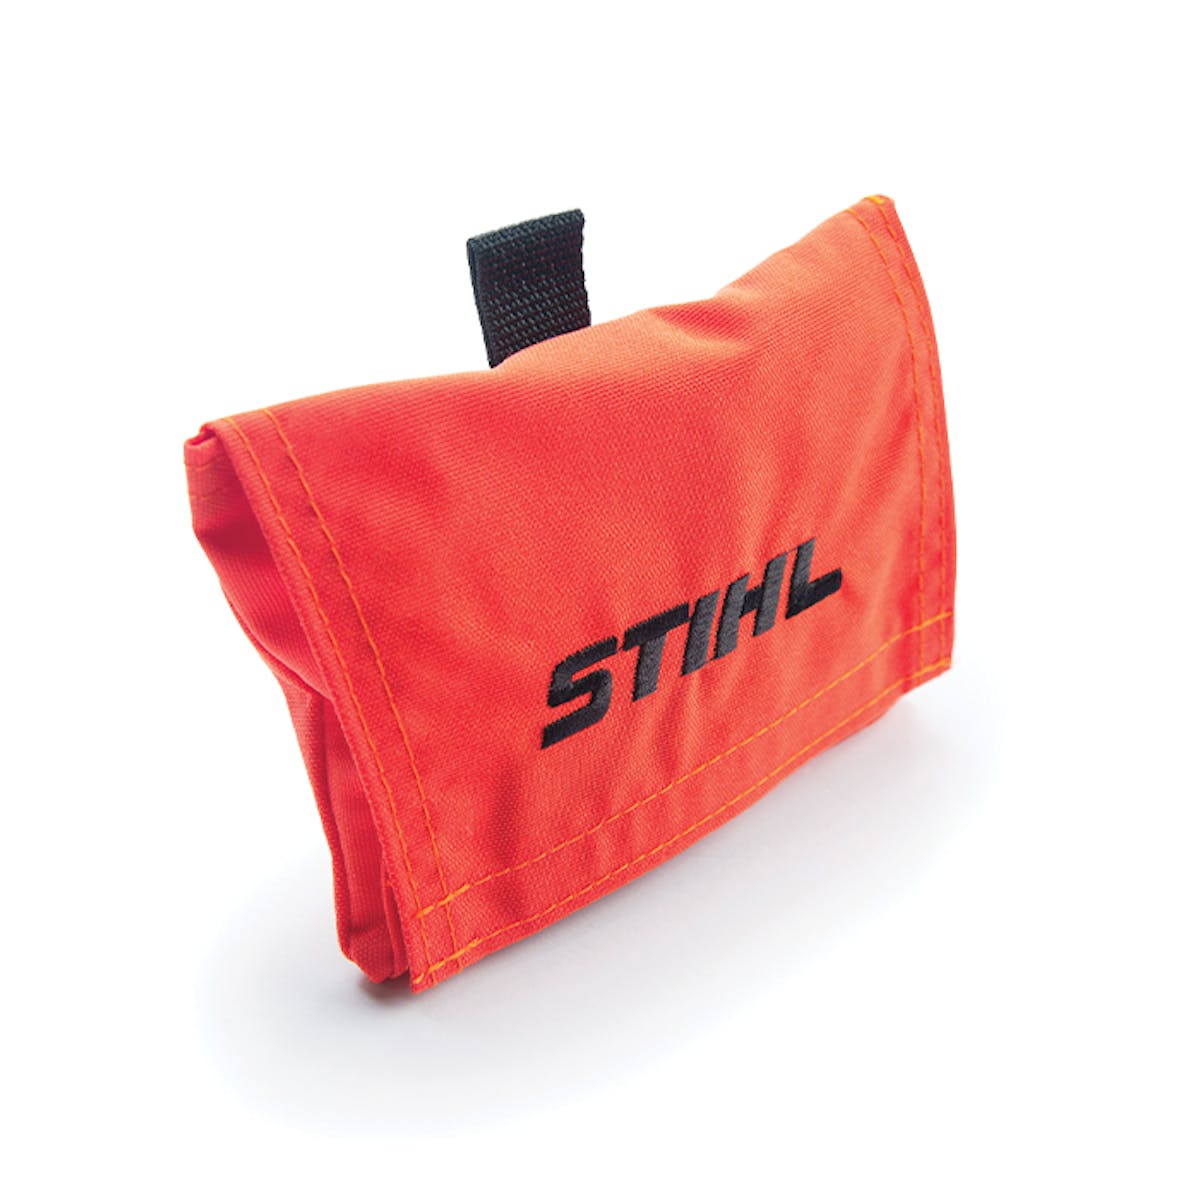 Kit de primeros auxilios de bolsa de cinturón STIHL